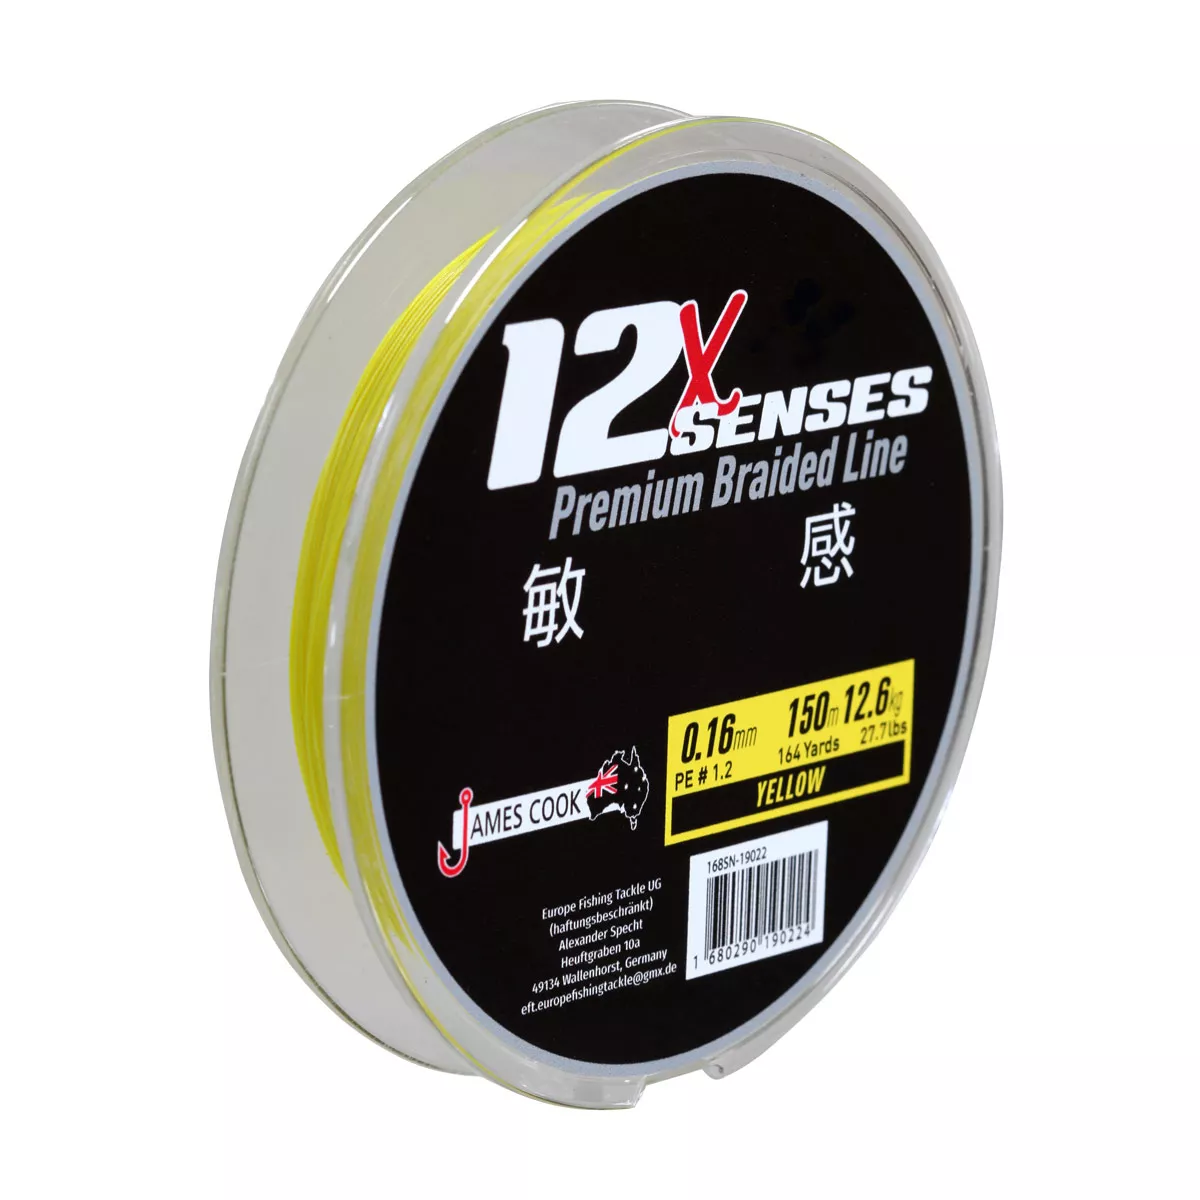 12X Senses Premium Braid 0,16mm 150m yellow 12,6kg